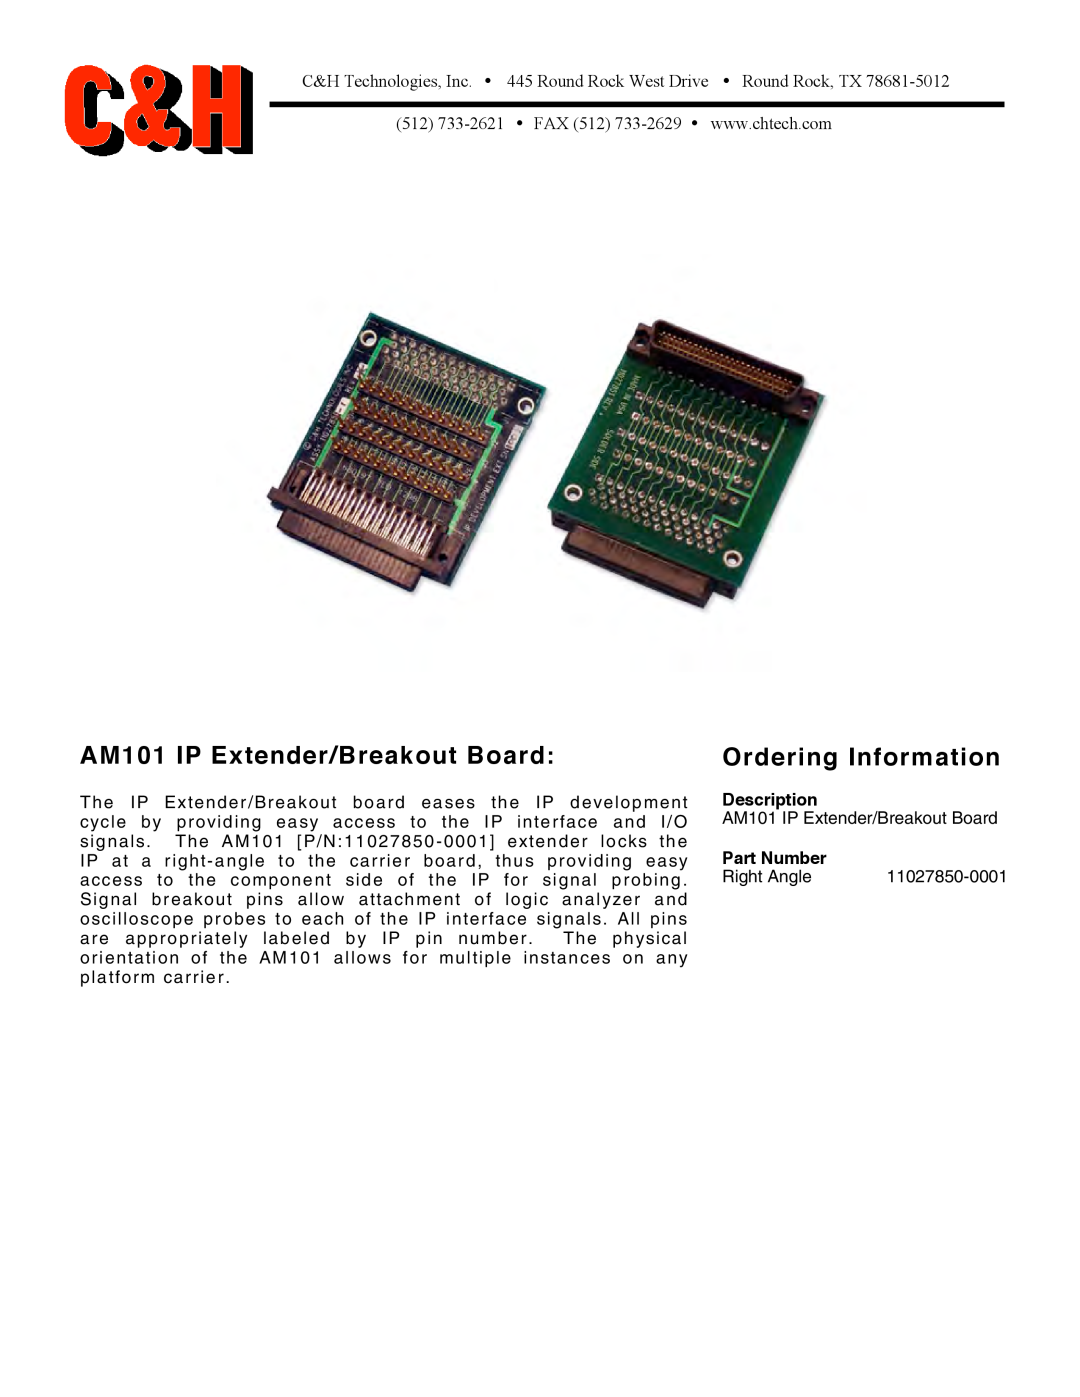 CH Tech manual AM101 IP Extender/Breakout Board, Ordering Information, Description, Part Number 